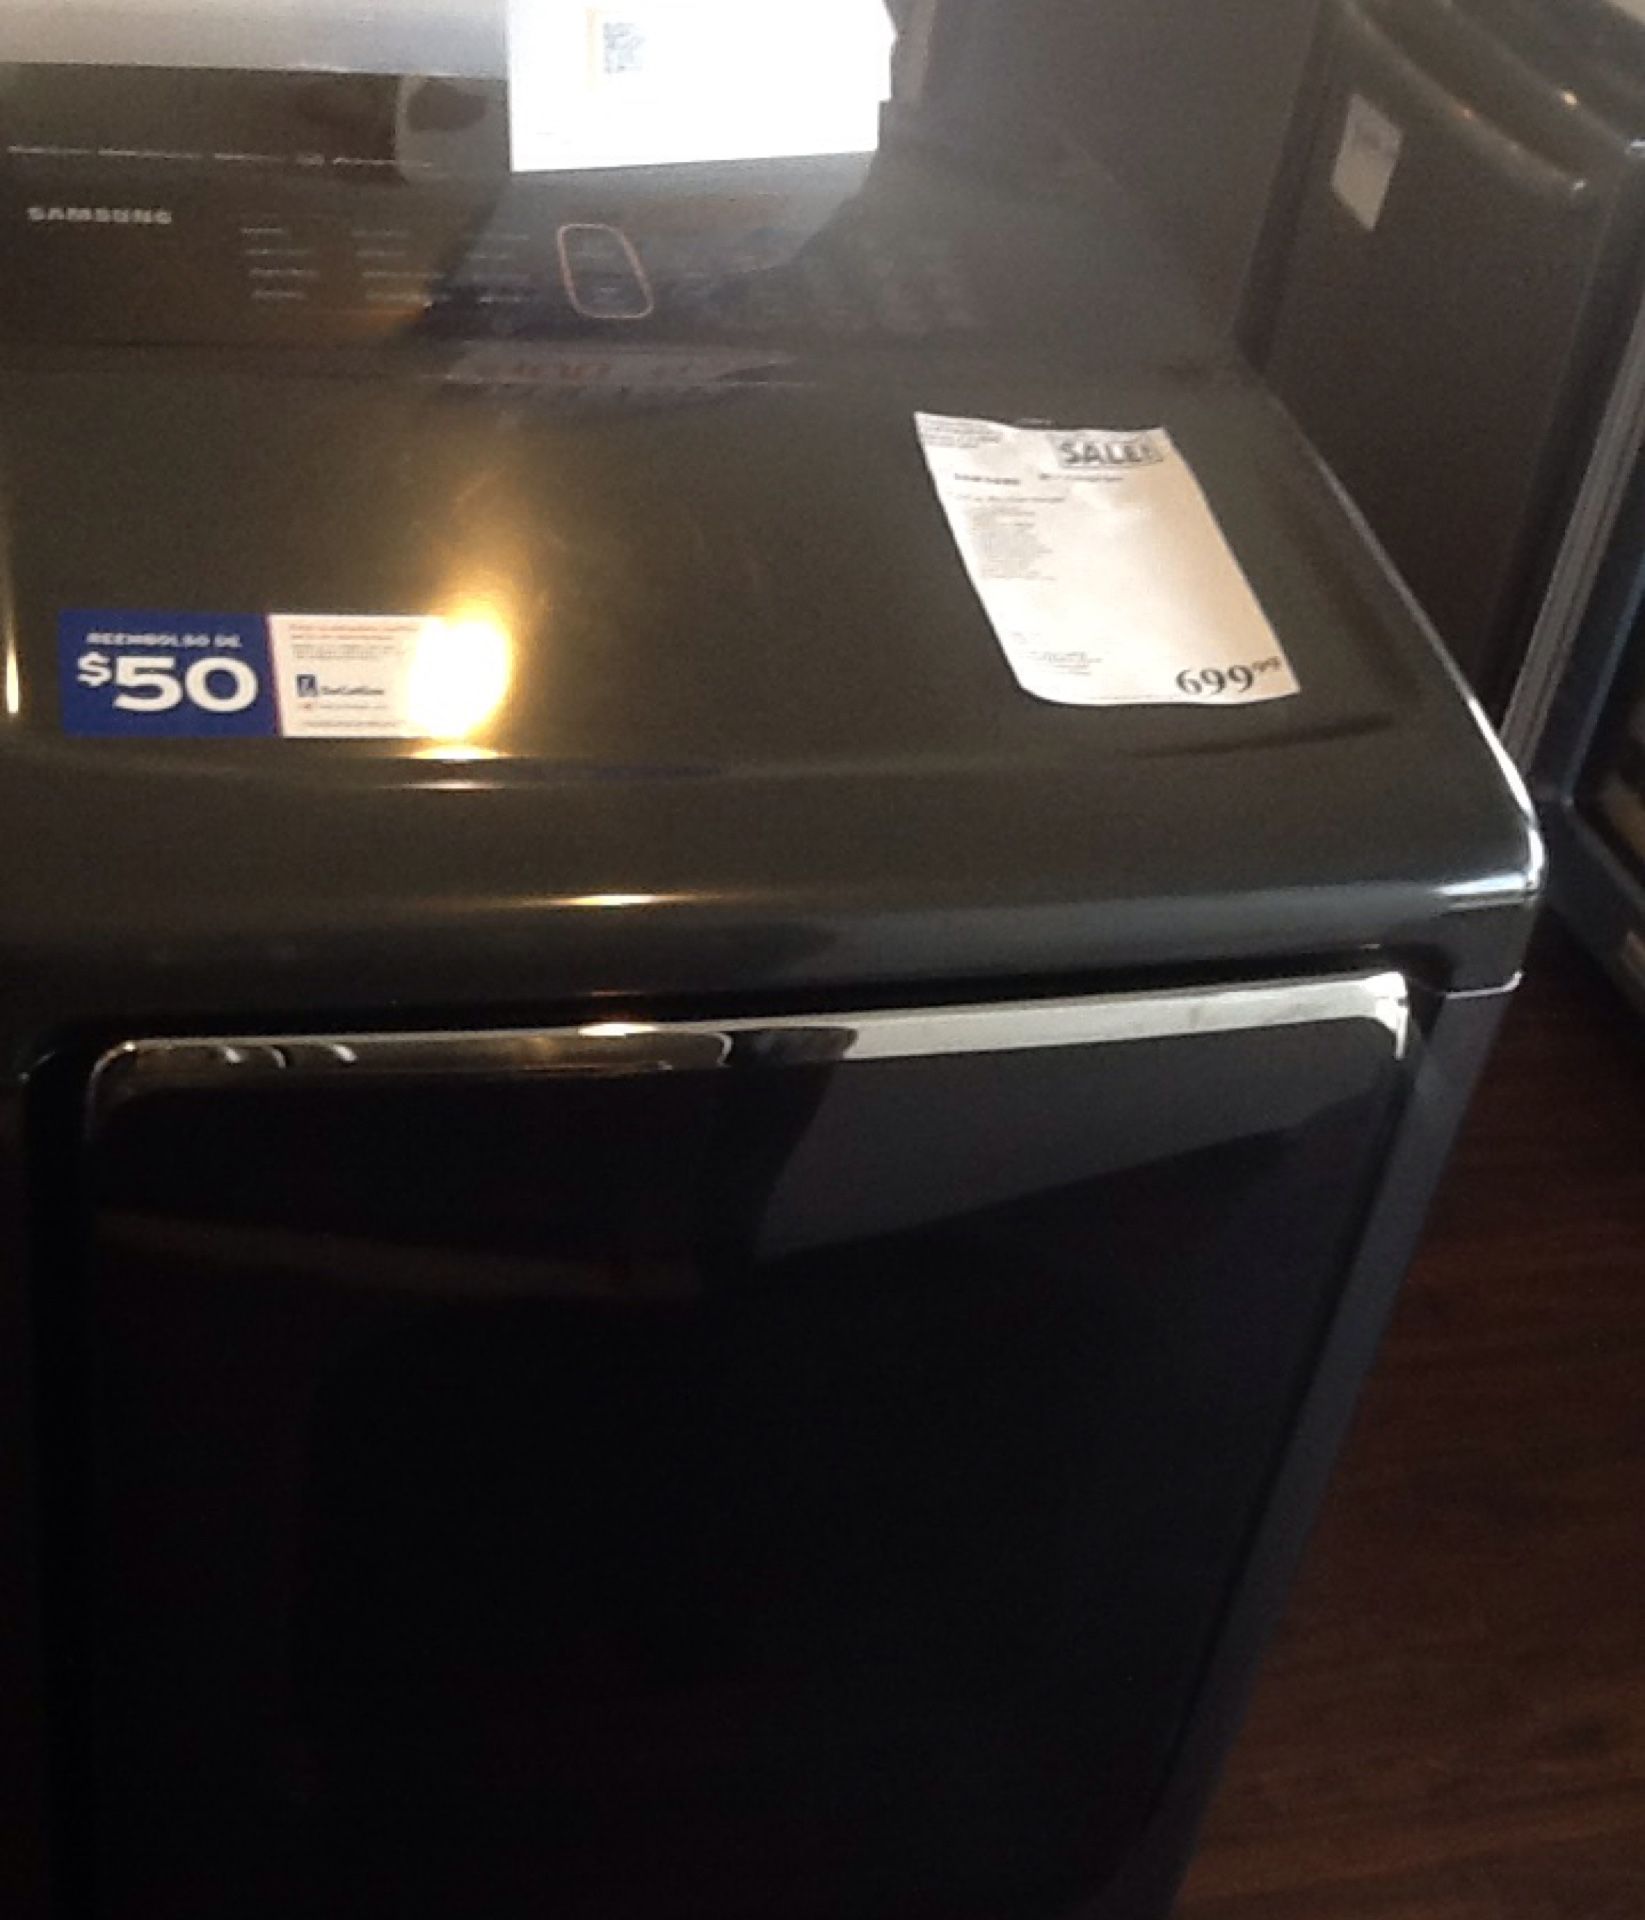 New open box Samsung gas dryer DVG54M8750V